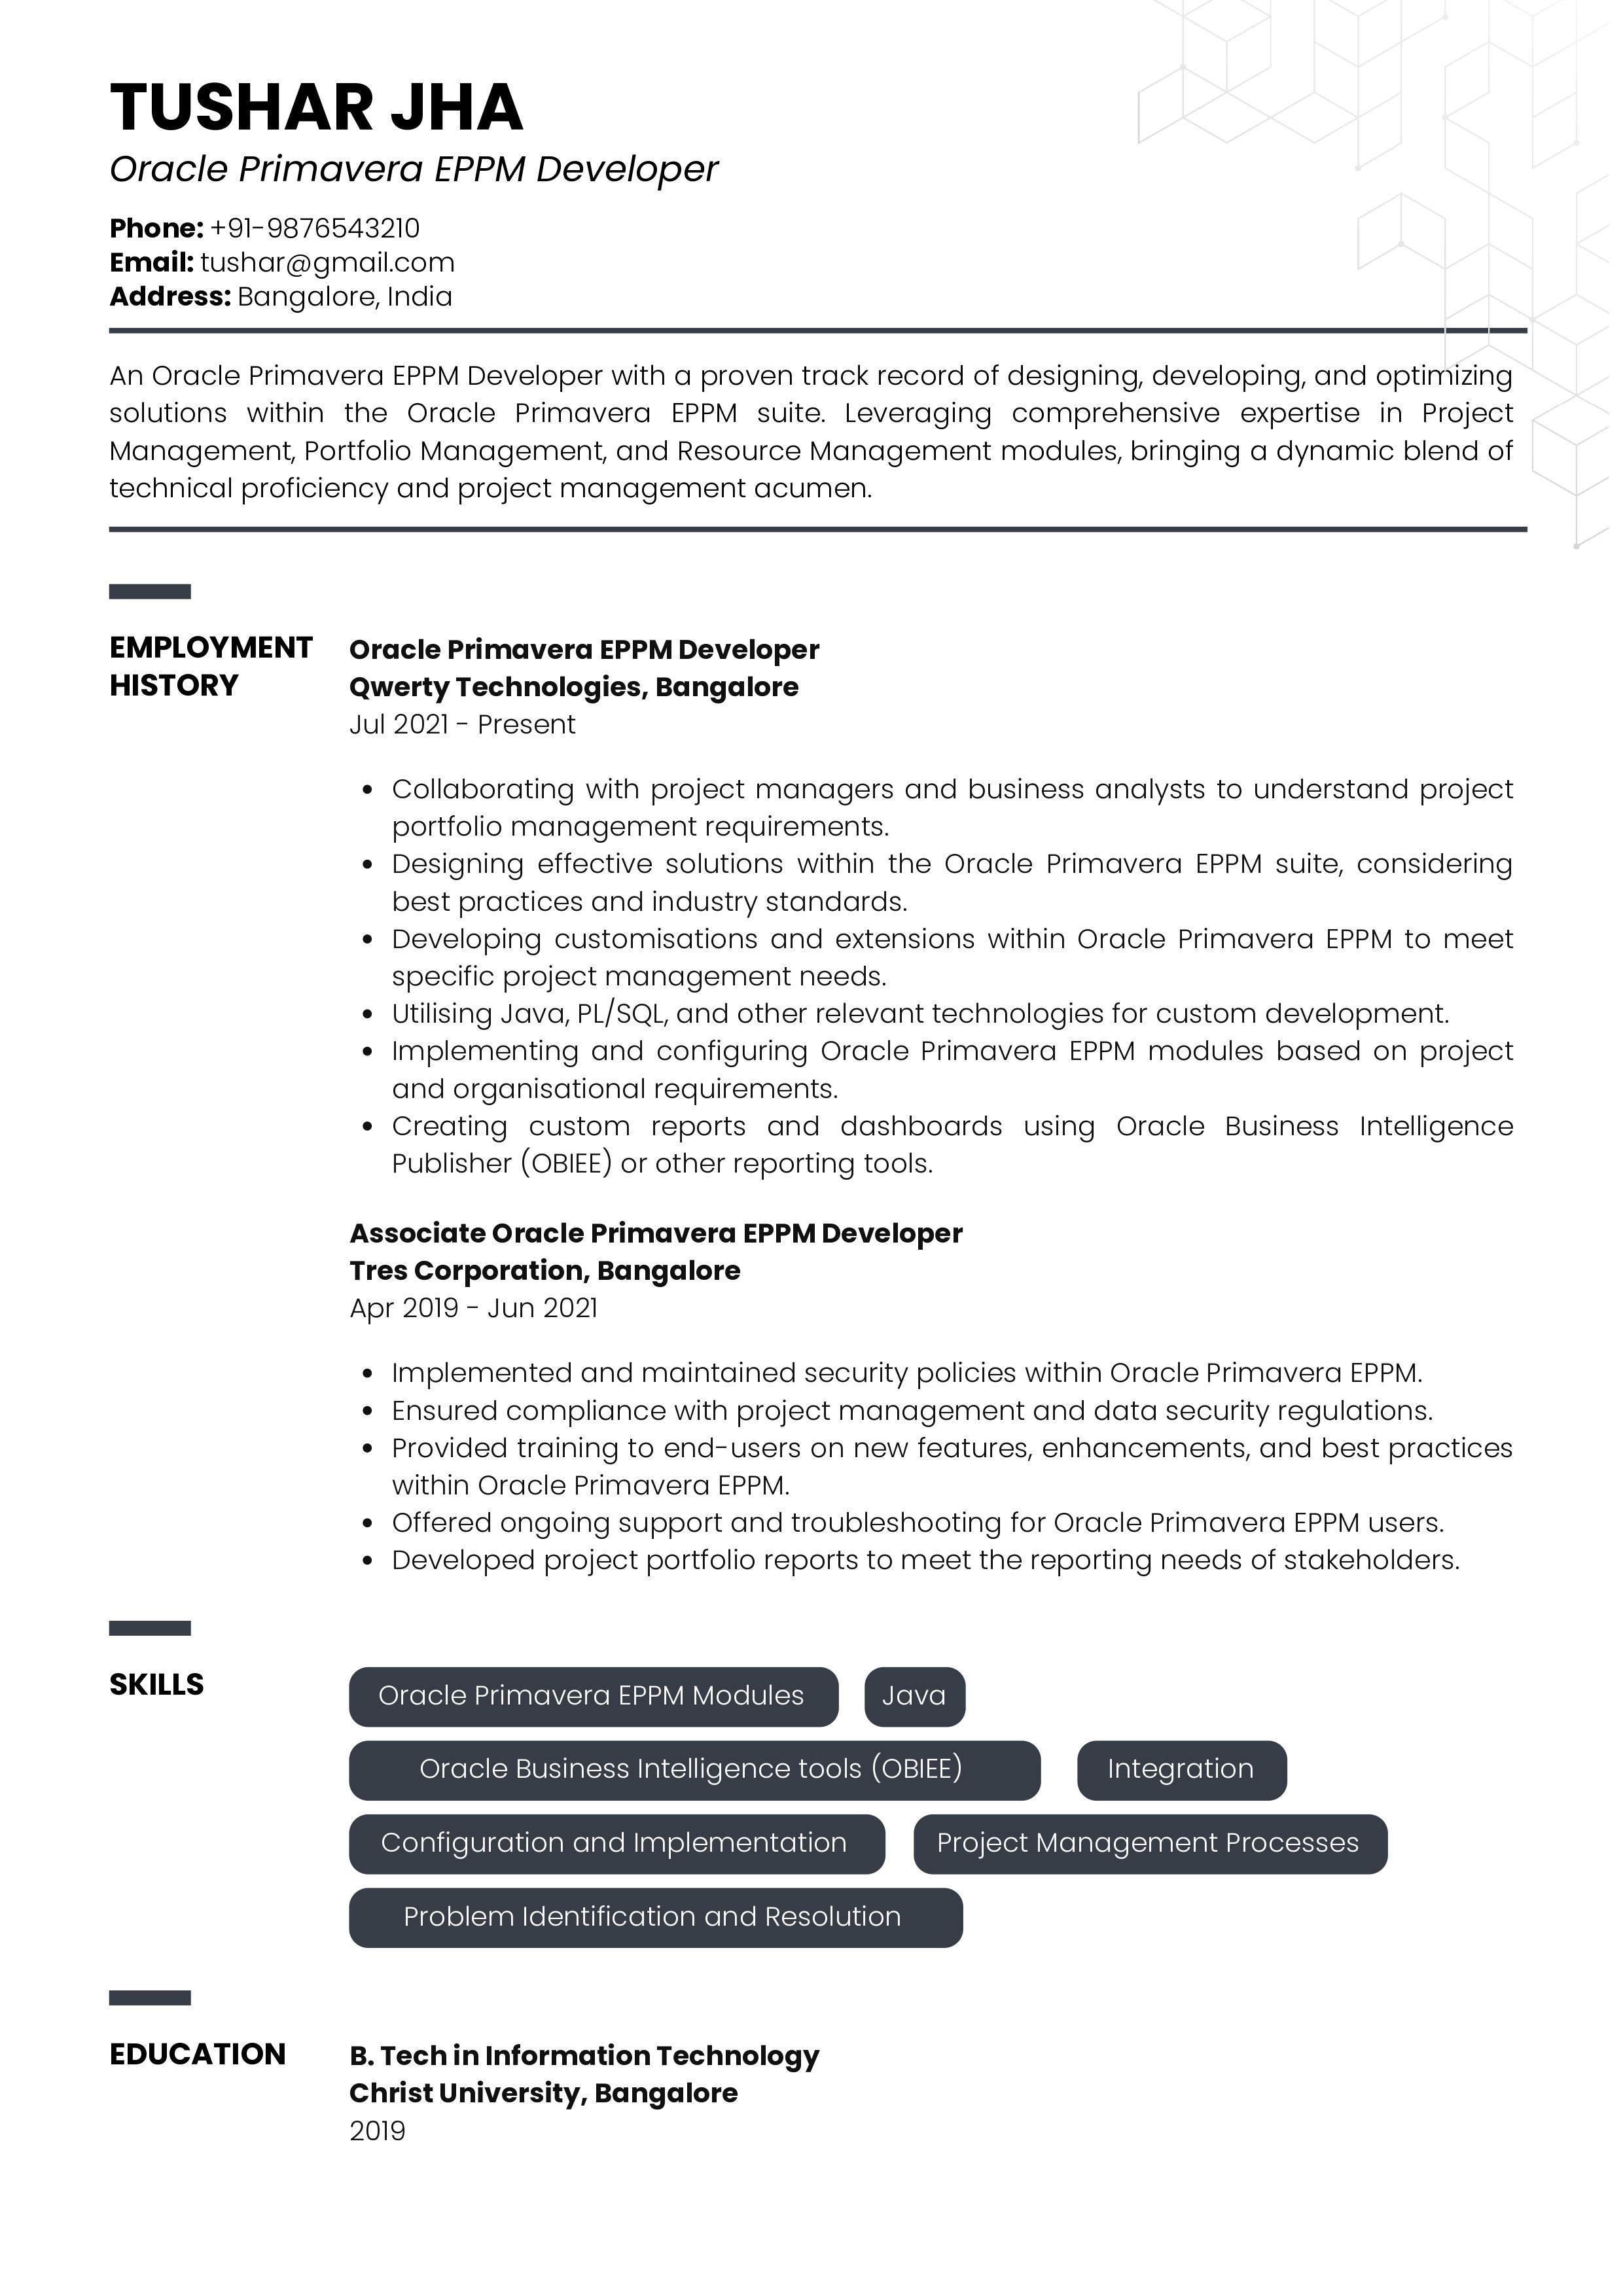 Sample Resume of Oracle Primavera EPPM Developer | Free Resume Templates & Samples on Resumod.co